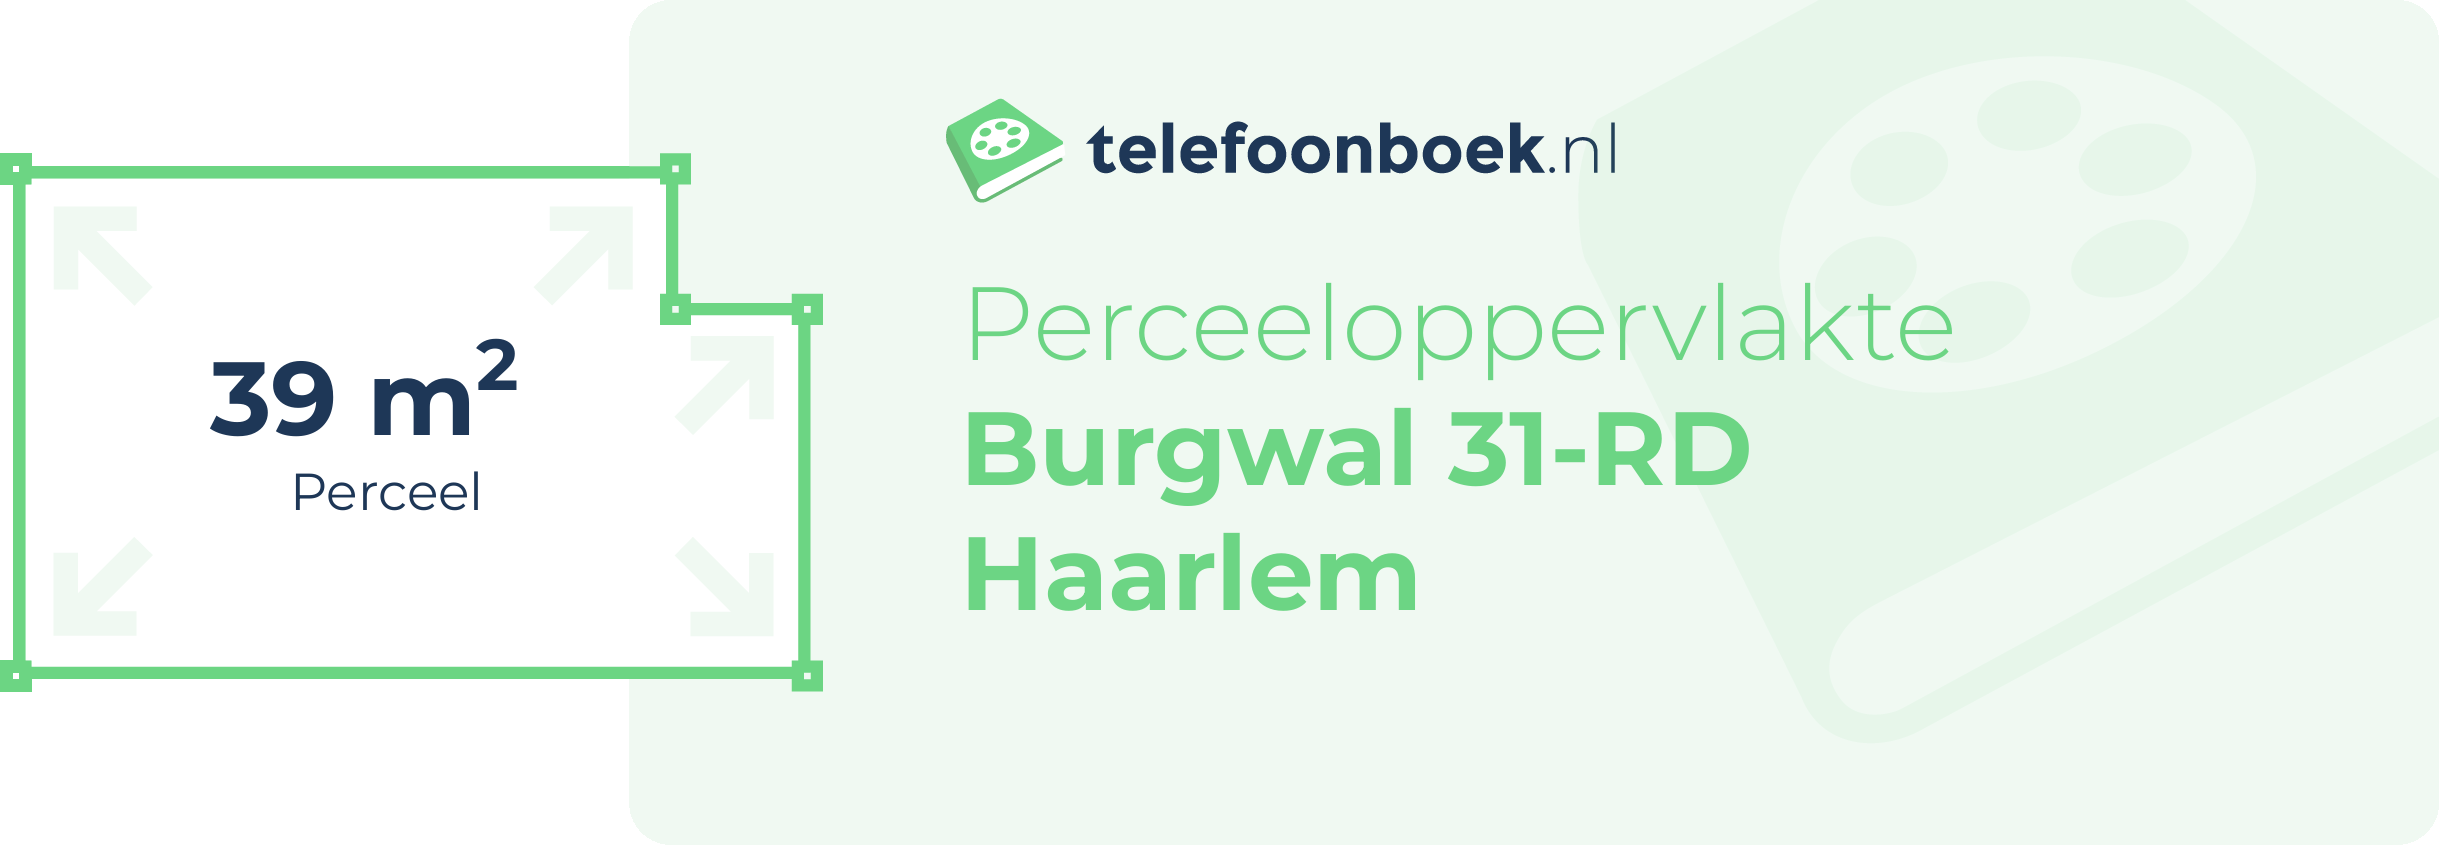 Perceeloppervlakte Burgwal 31-RD Haarlem